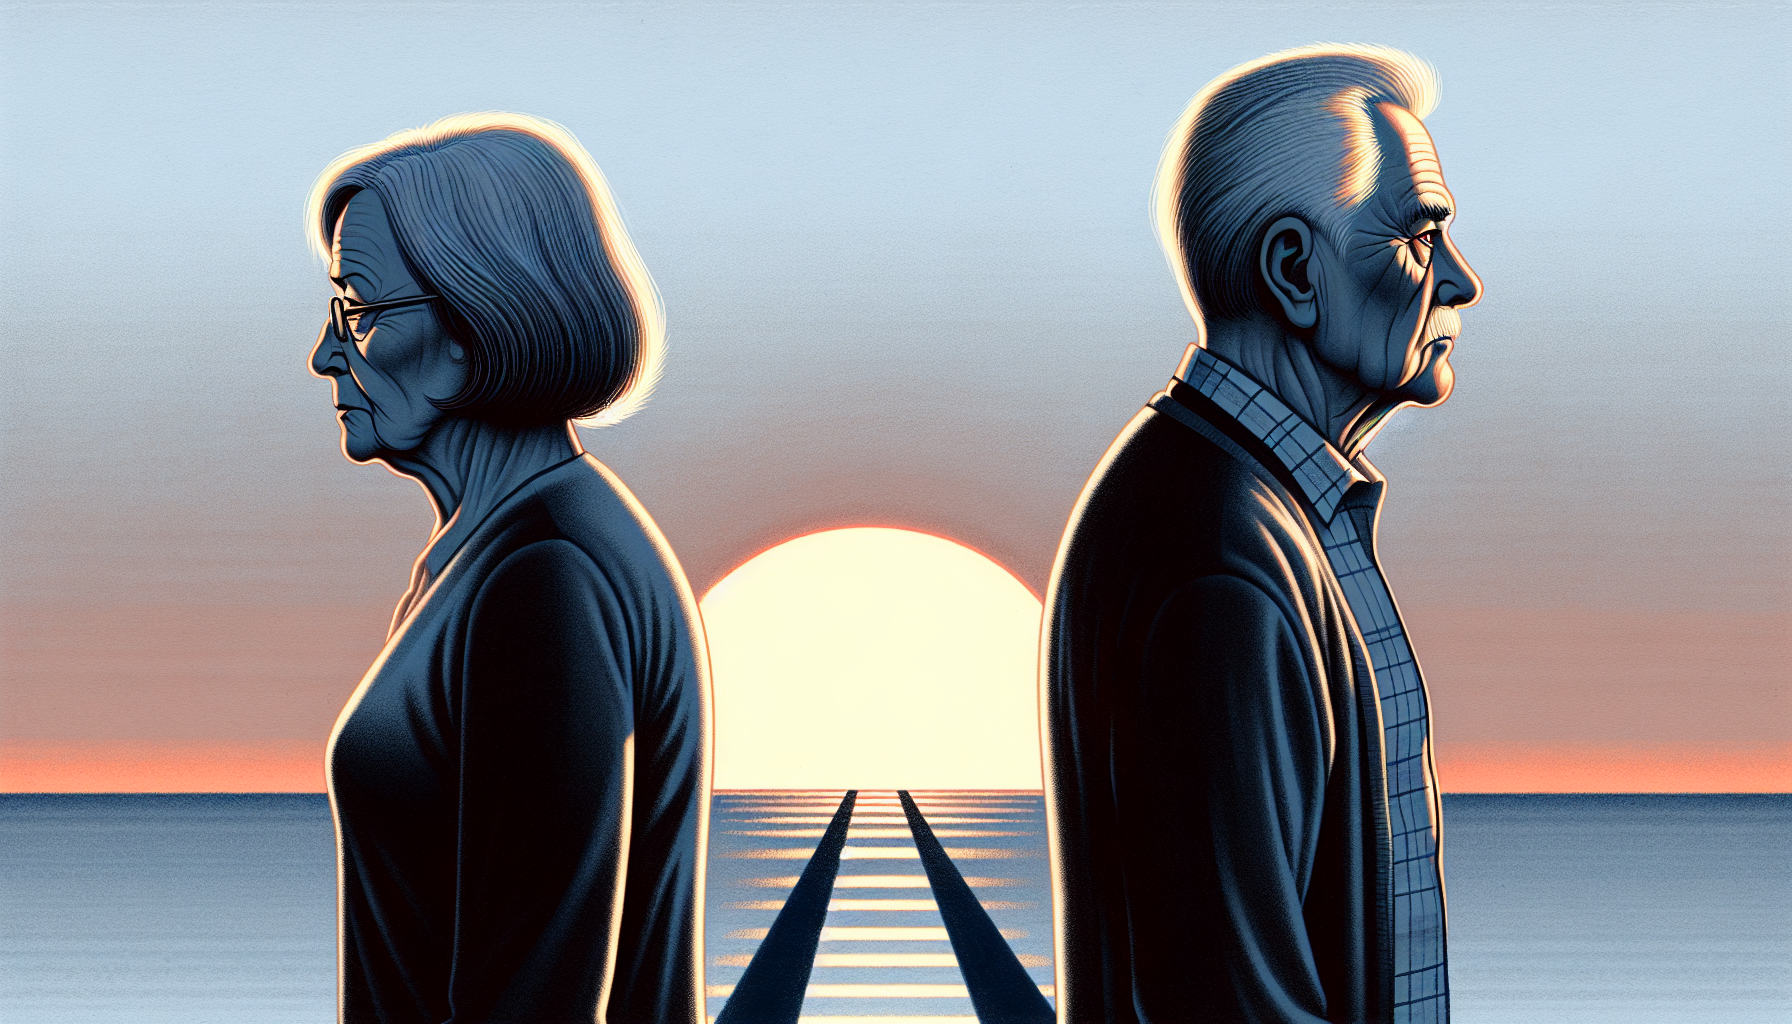 Illustration of older couple going separate ways symbolizing gray divorce